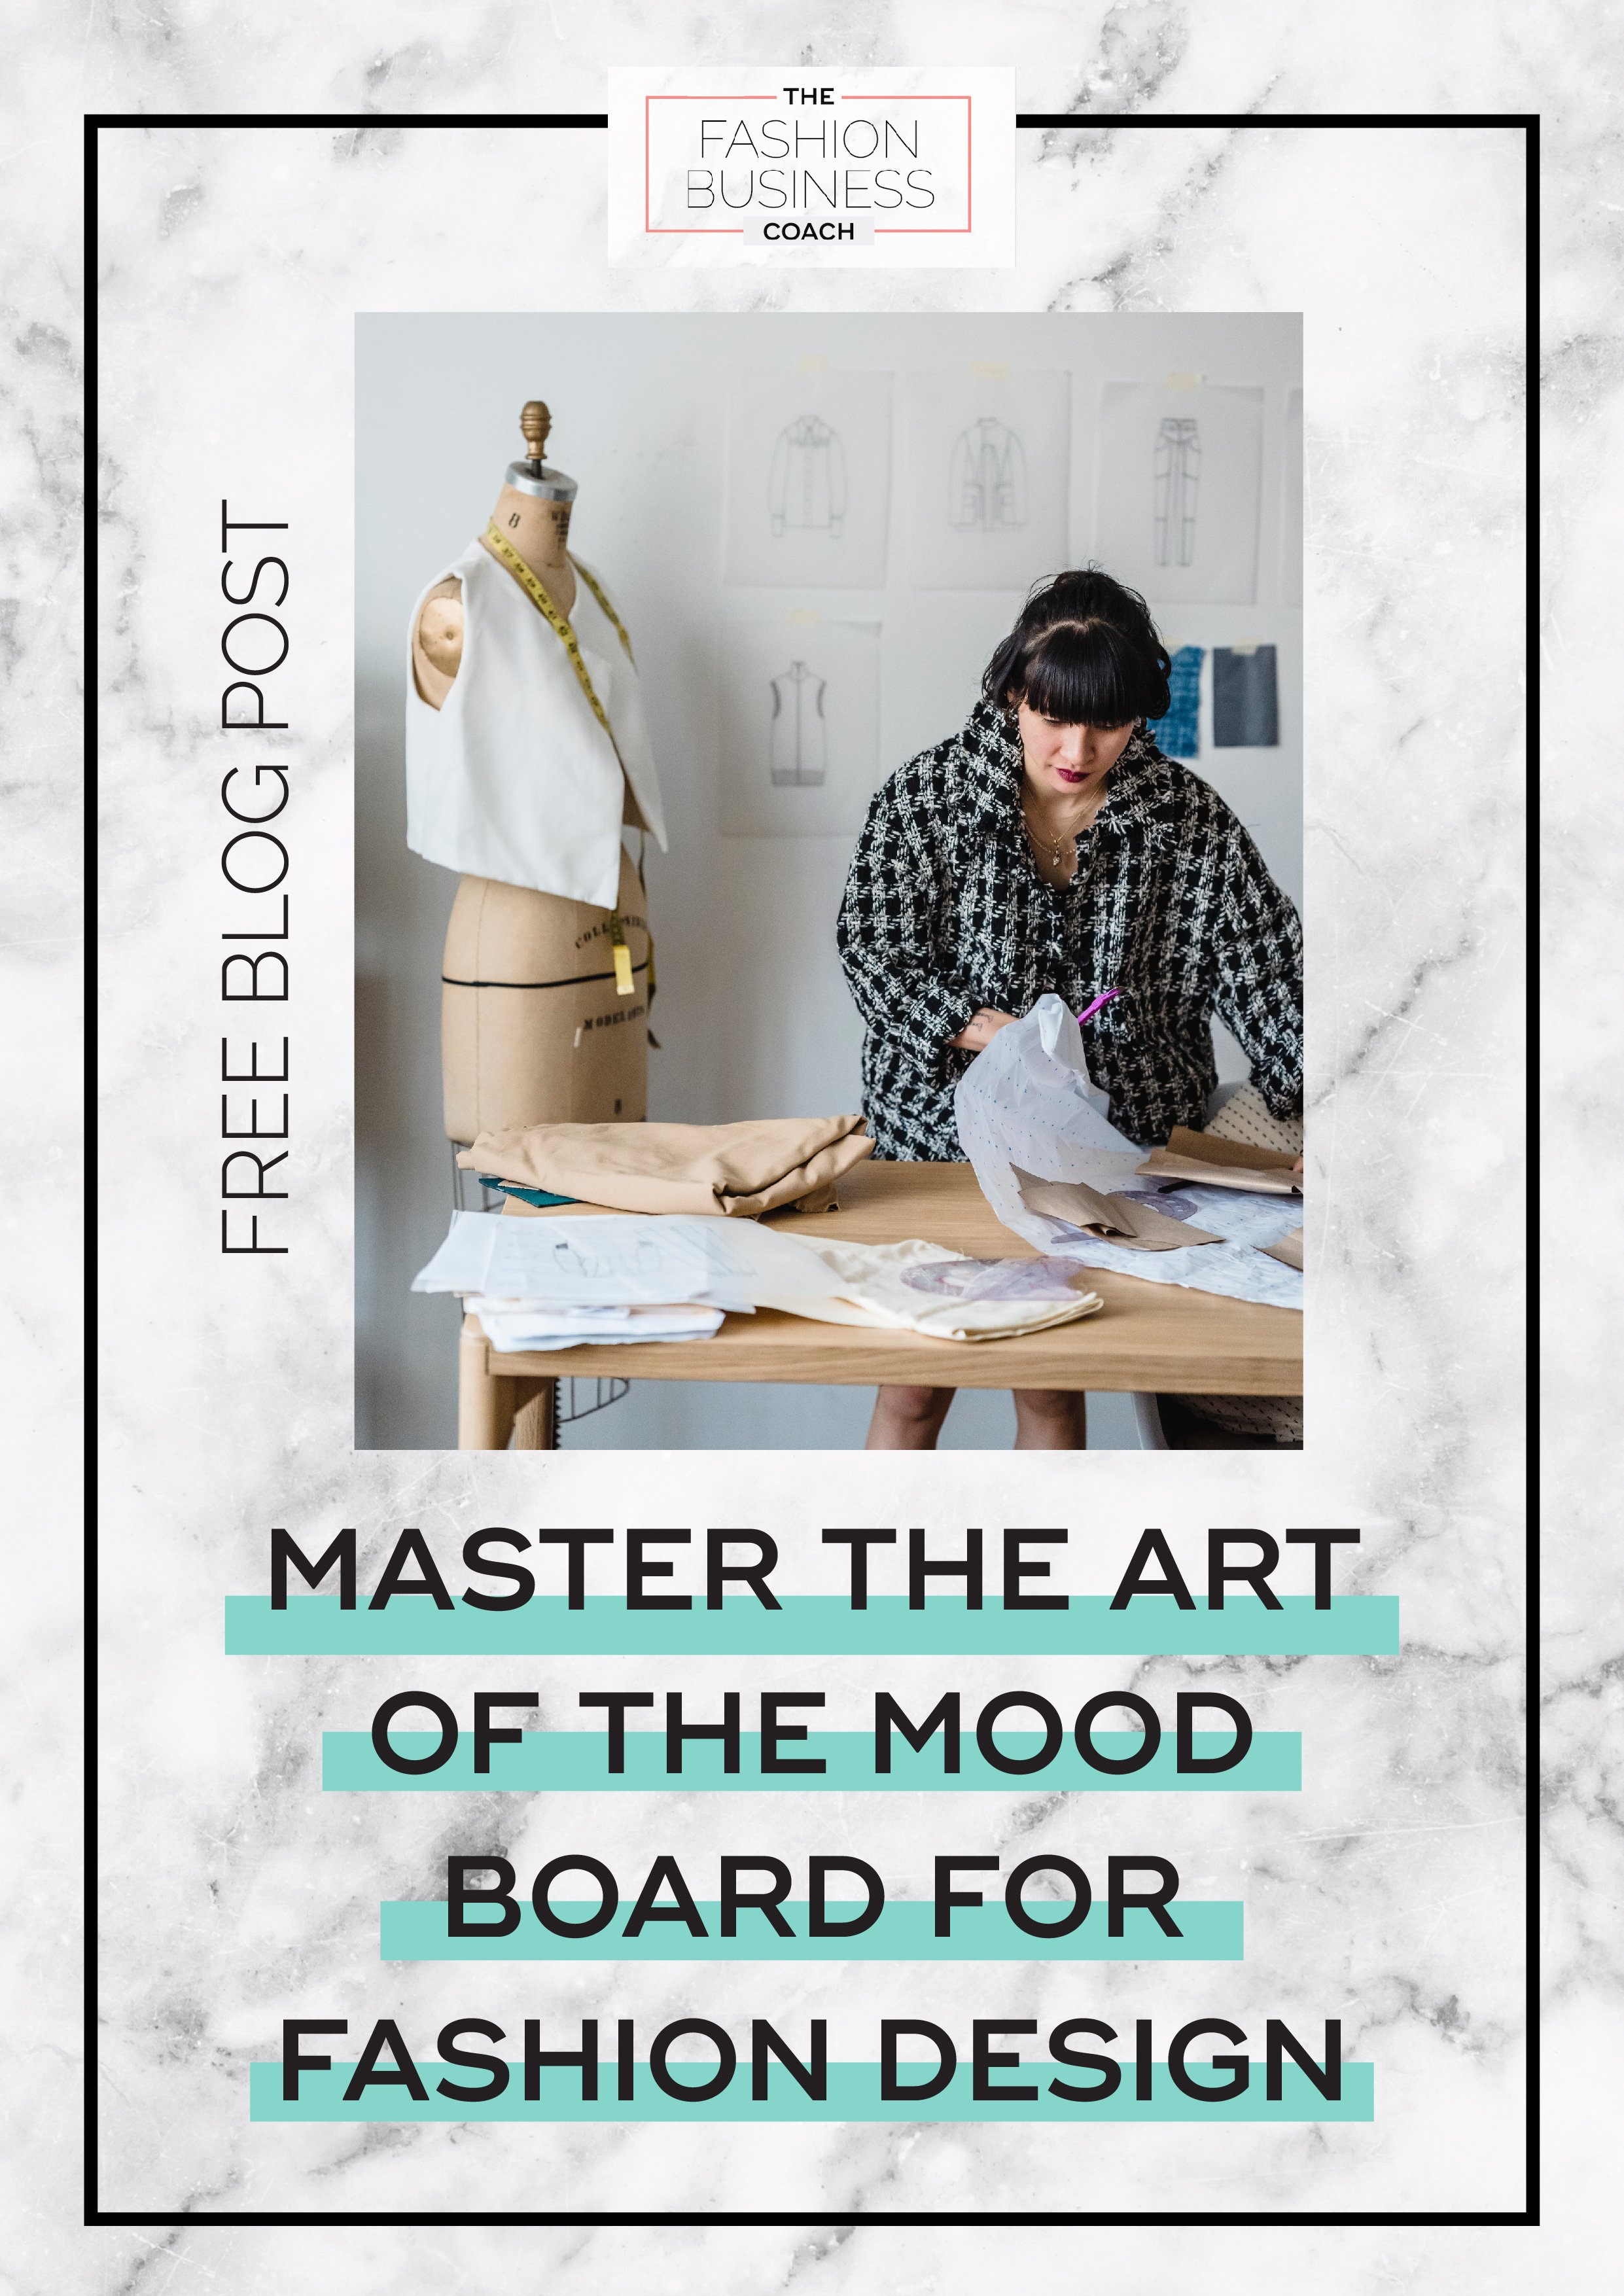 Pinterest_Master the Art of the Mood Board for Fashion Design 2.jpg